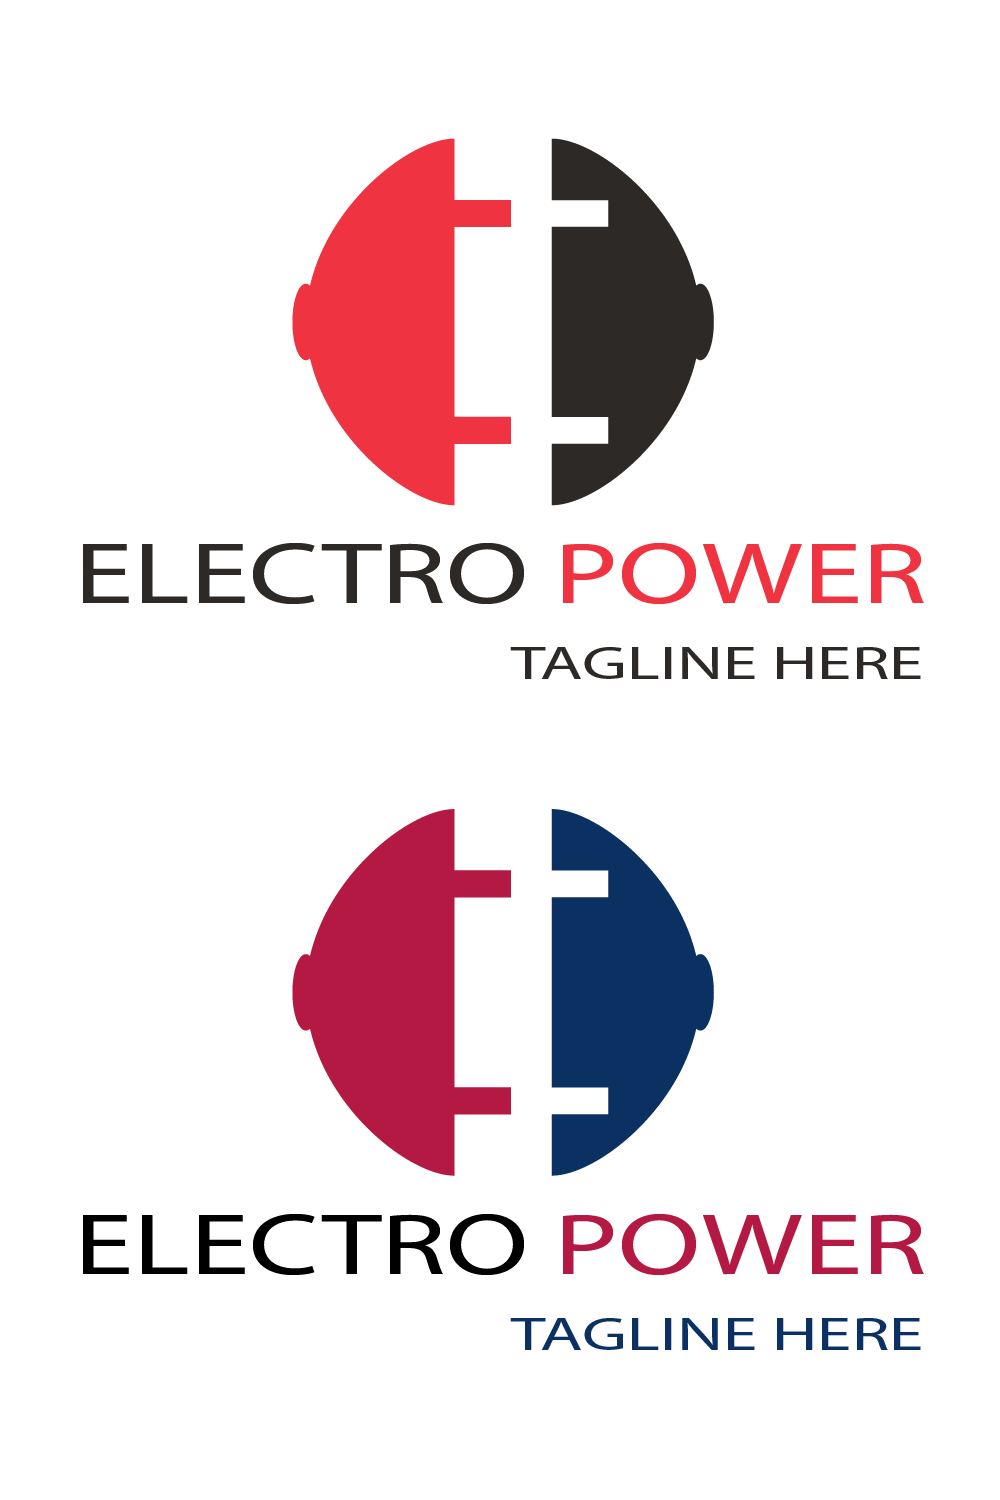 Electrical Logo Pinterest image.